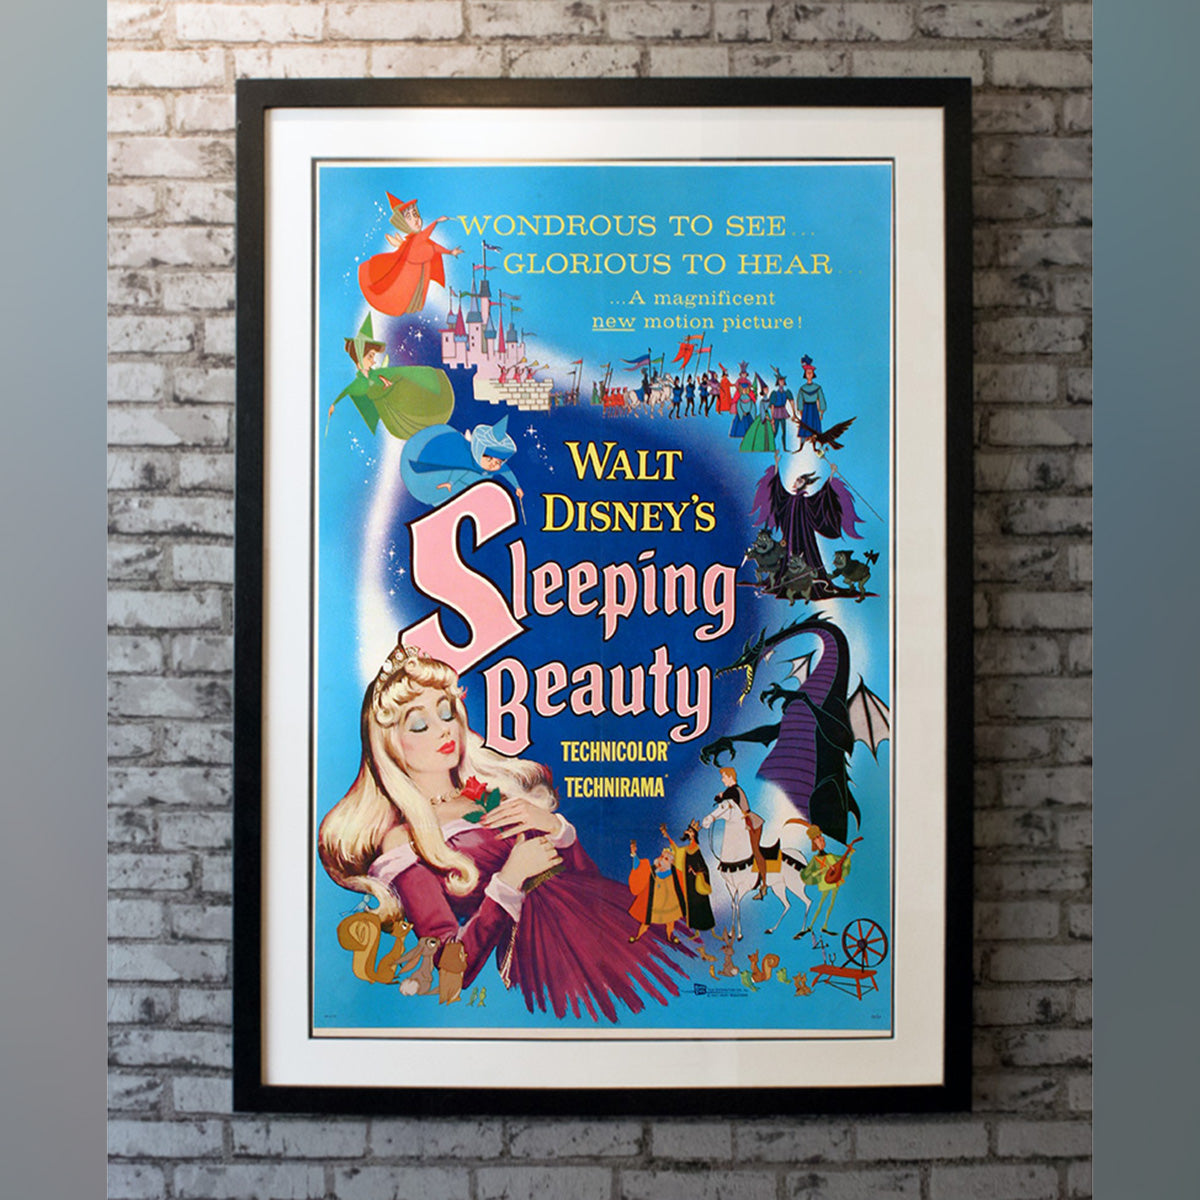 Original Movie Poster of Sleeping Beauty (1959)